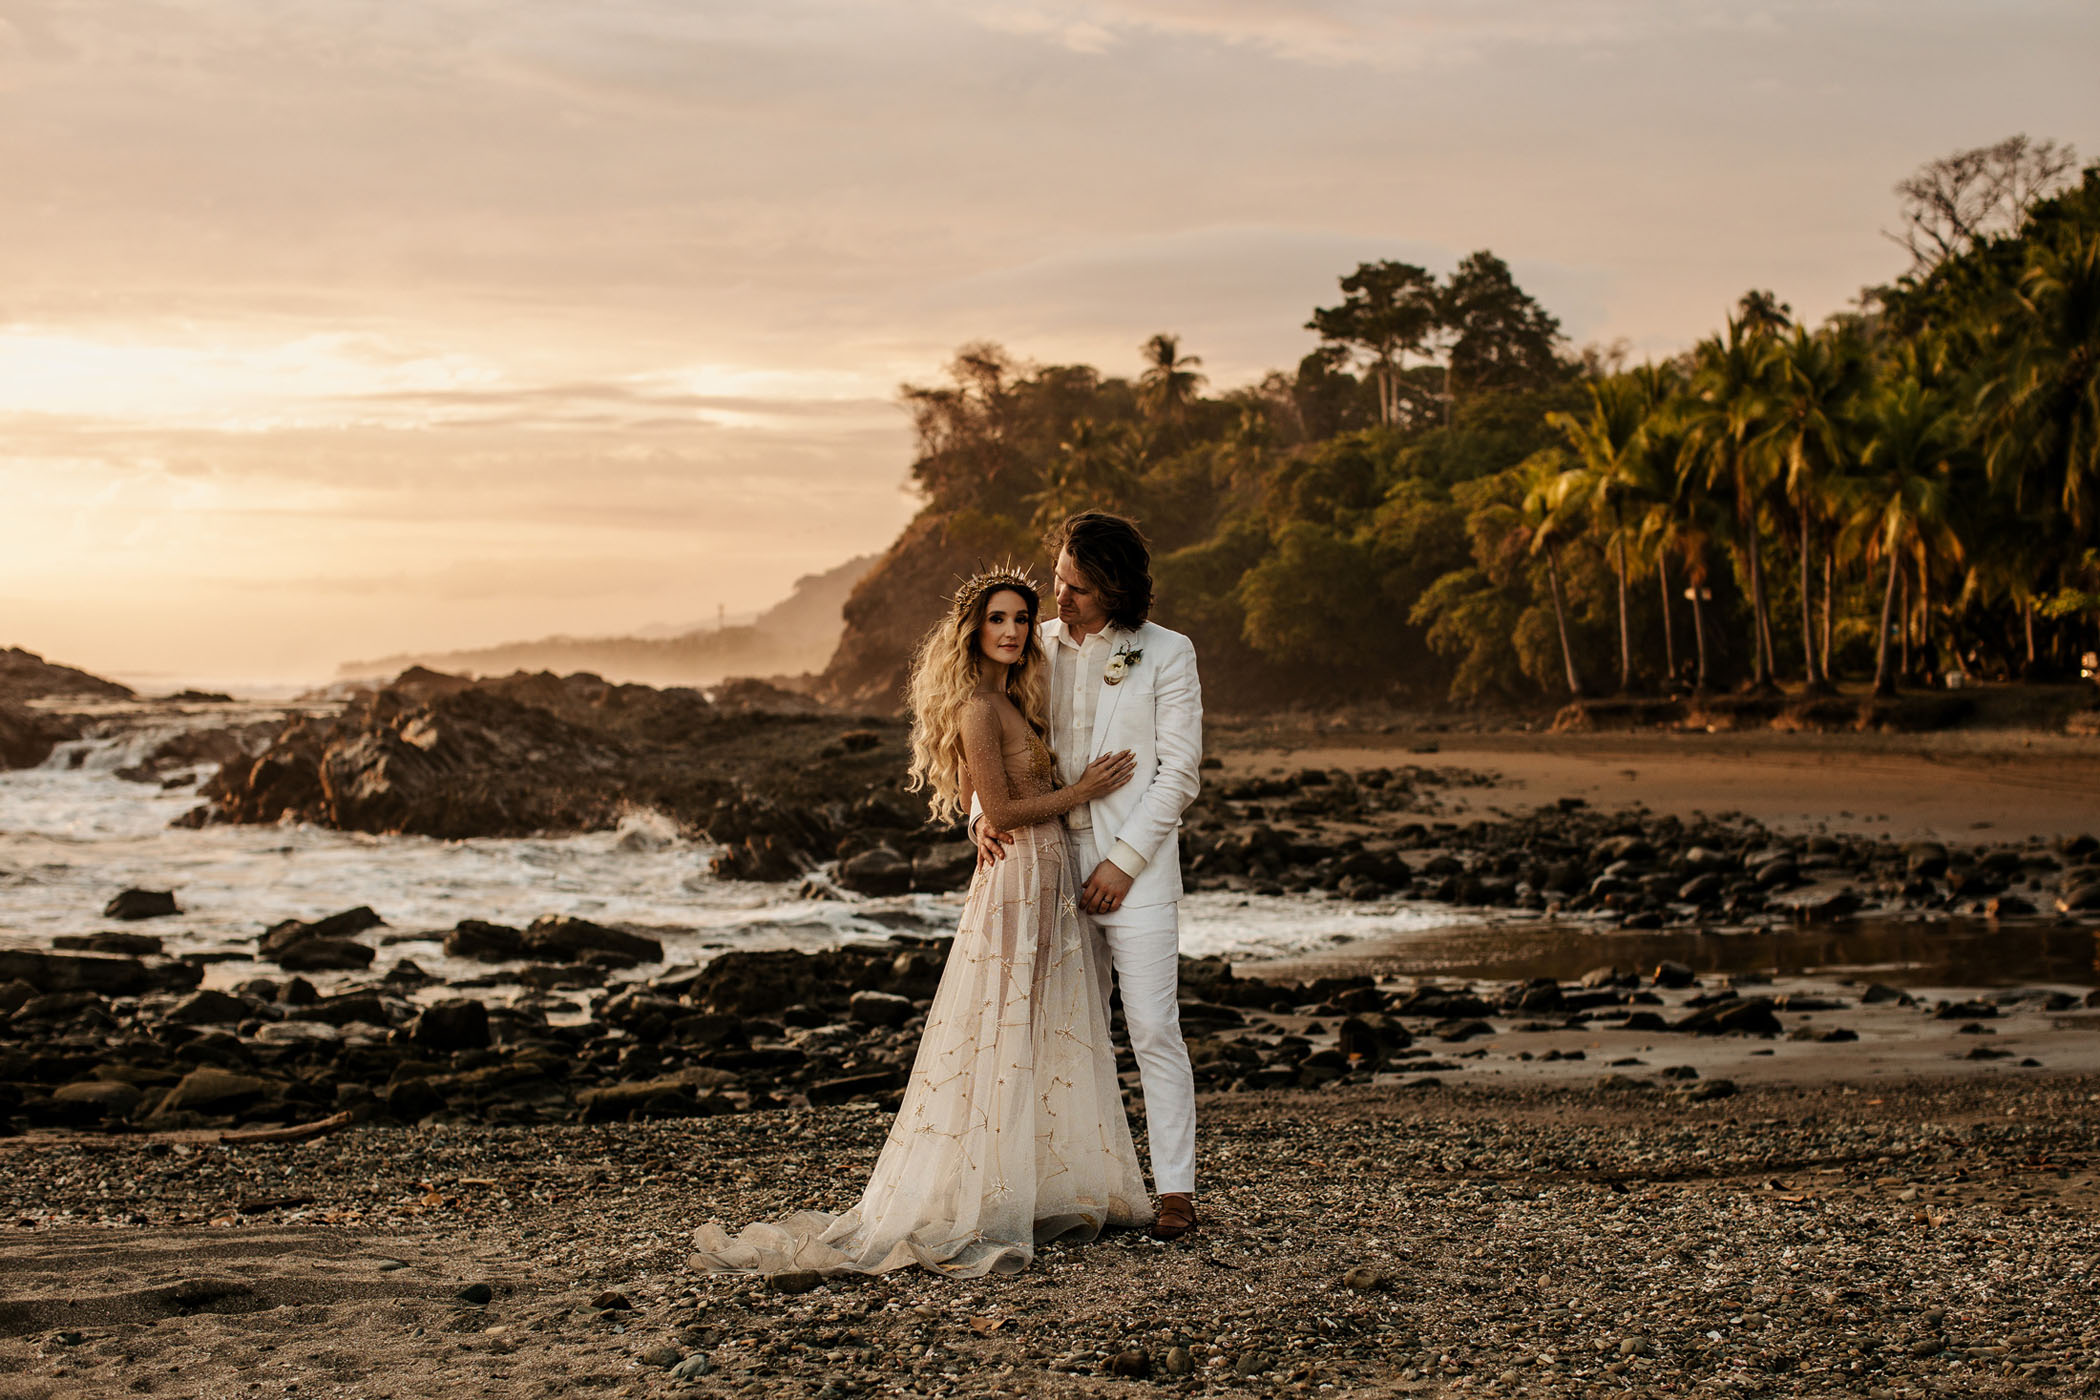 Eclipse Themed Boho Beach Wedding in Costa Rica